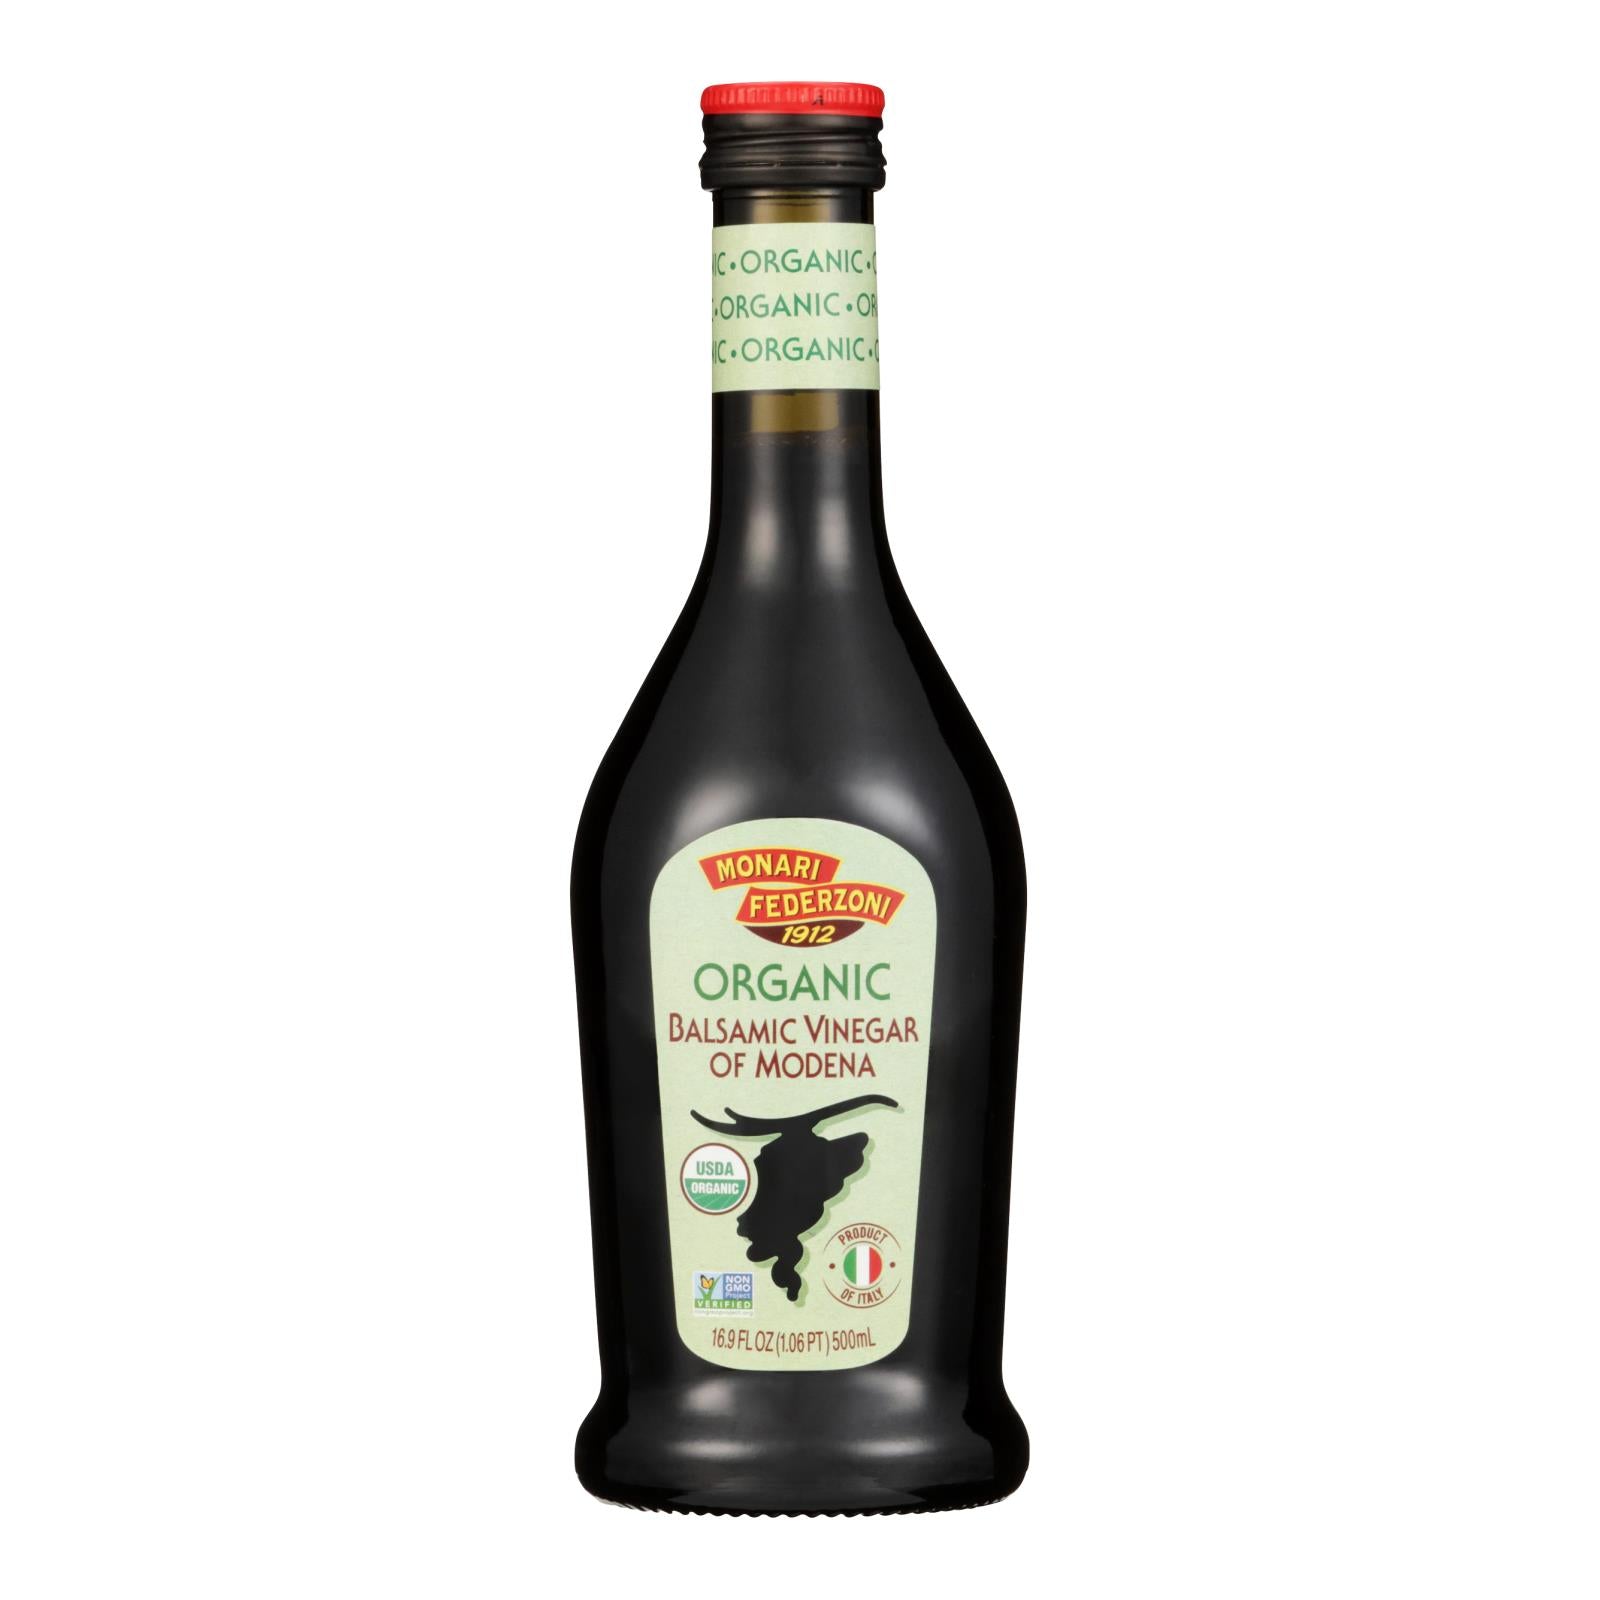 Monari Federzoni Balsamic Vinegar of Modena - Organic - Case of 6 - 17 Fl oz.